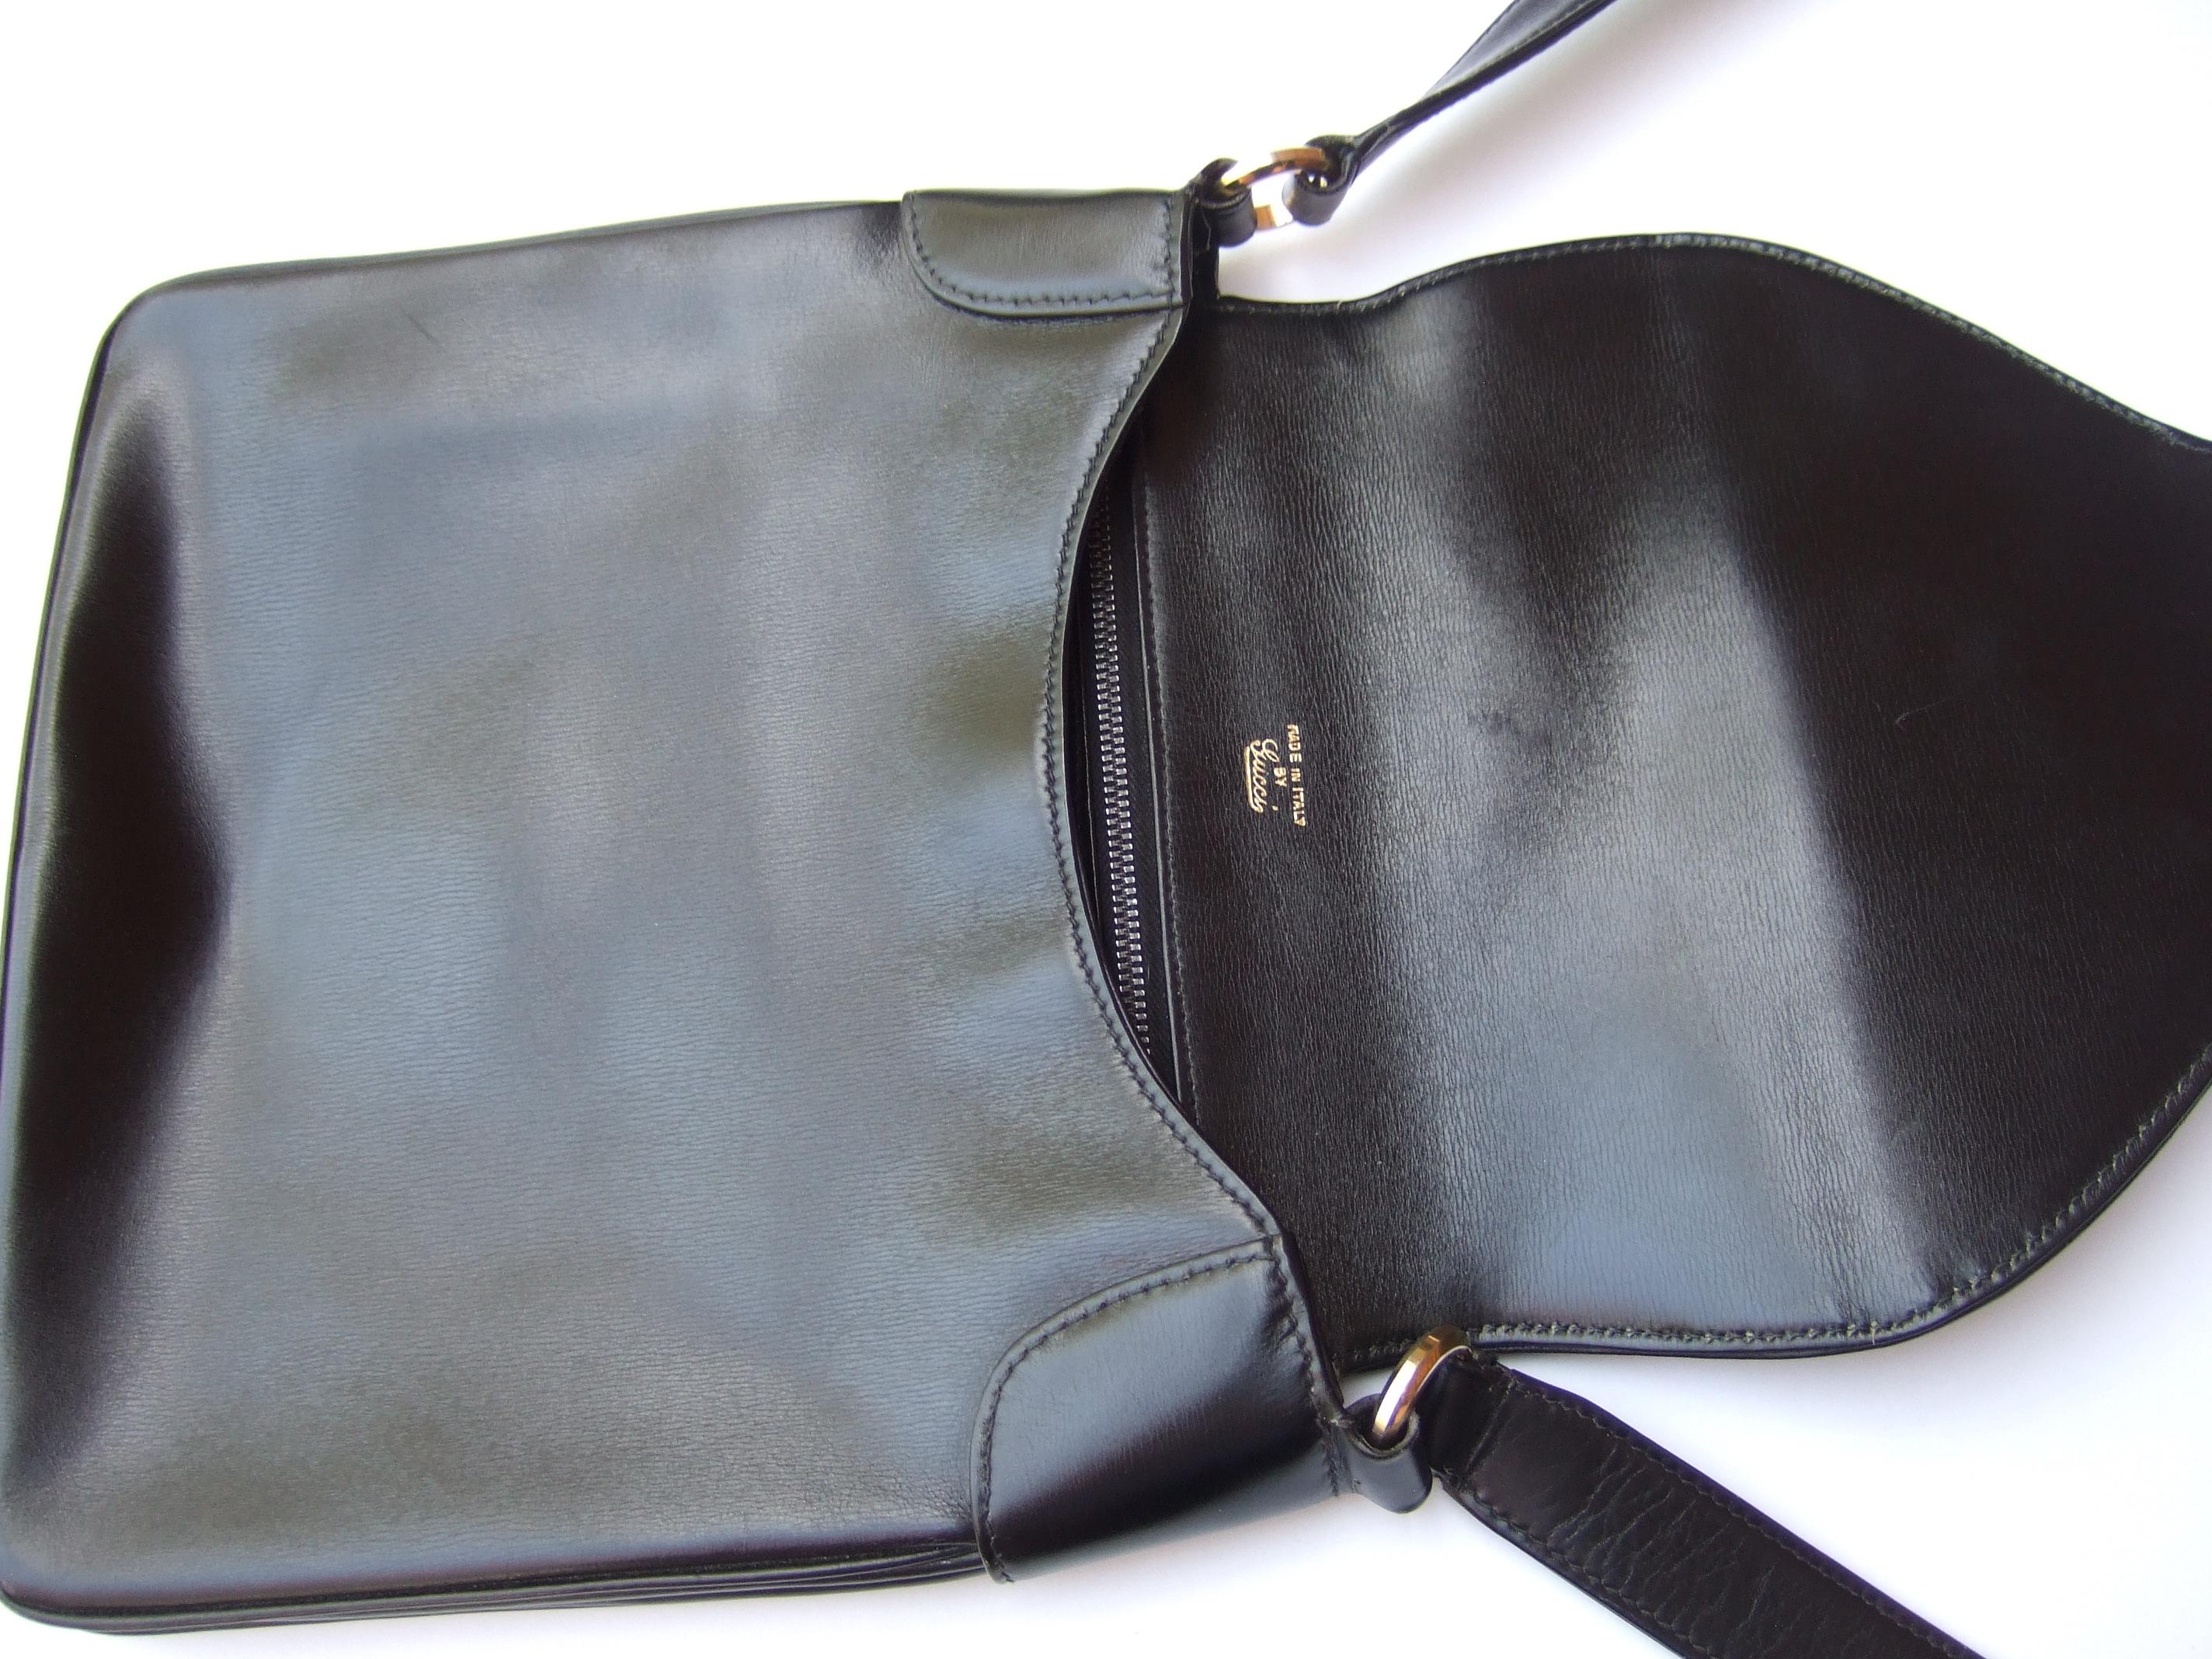 GUCCI Extremely Rare Ebony Leather Equestrian Emblem Handbag c 1970s For Sale 5